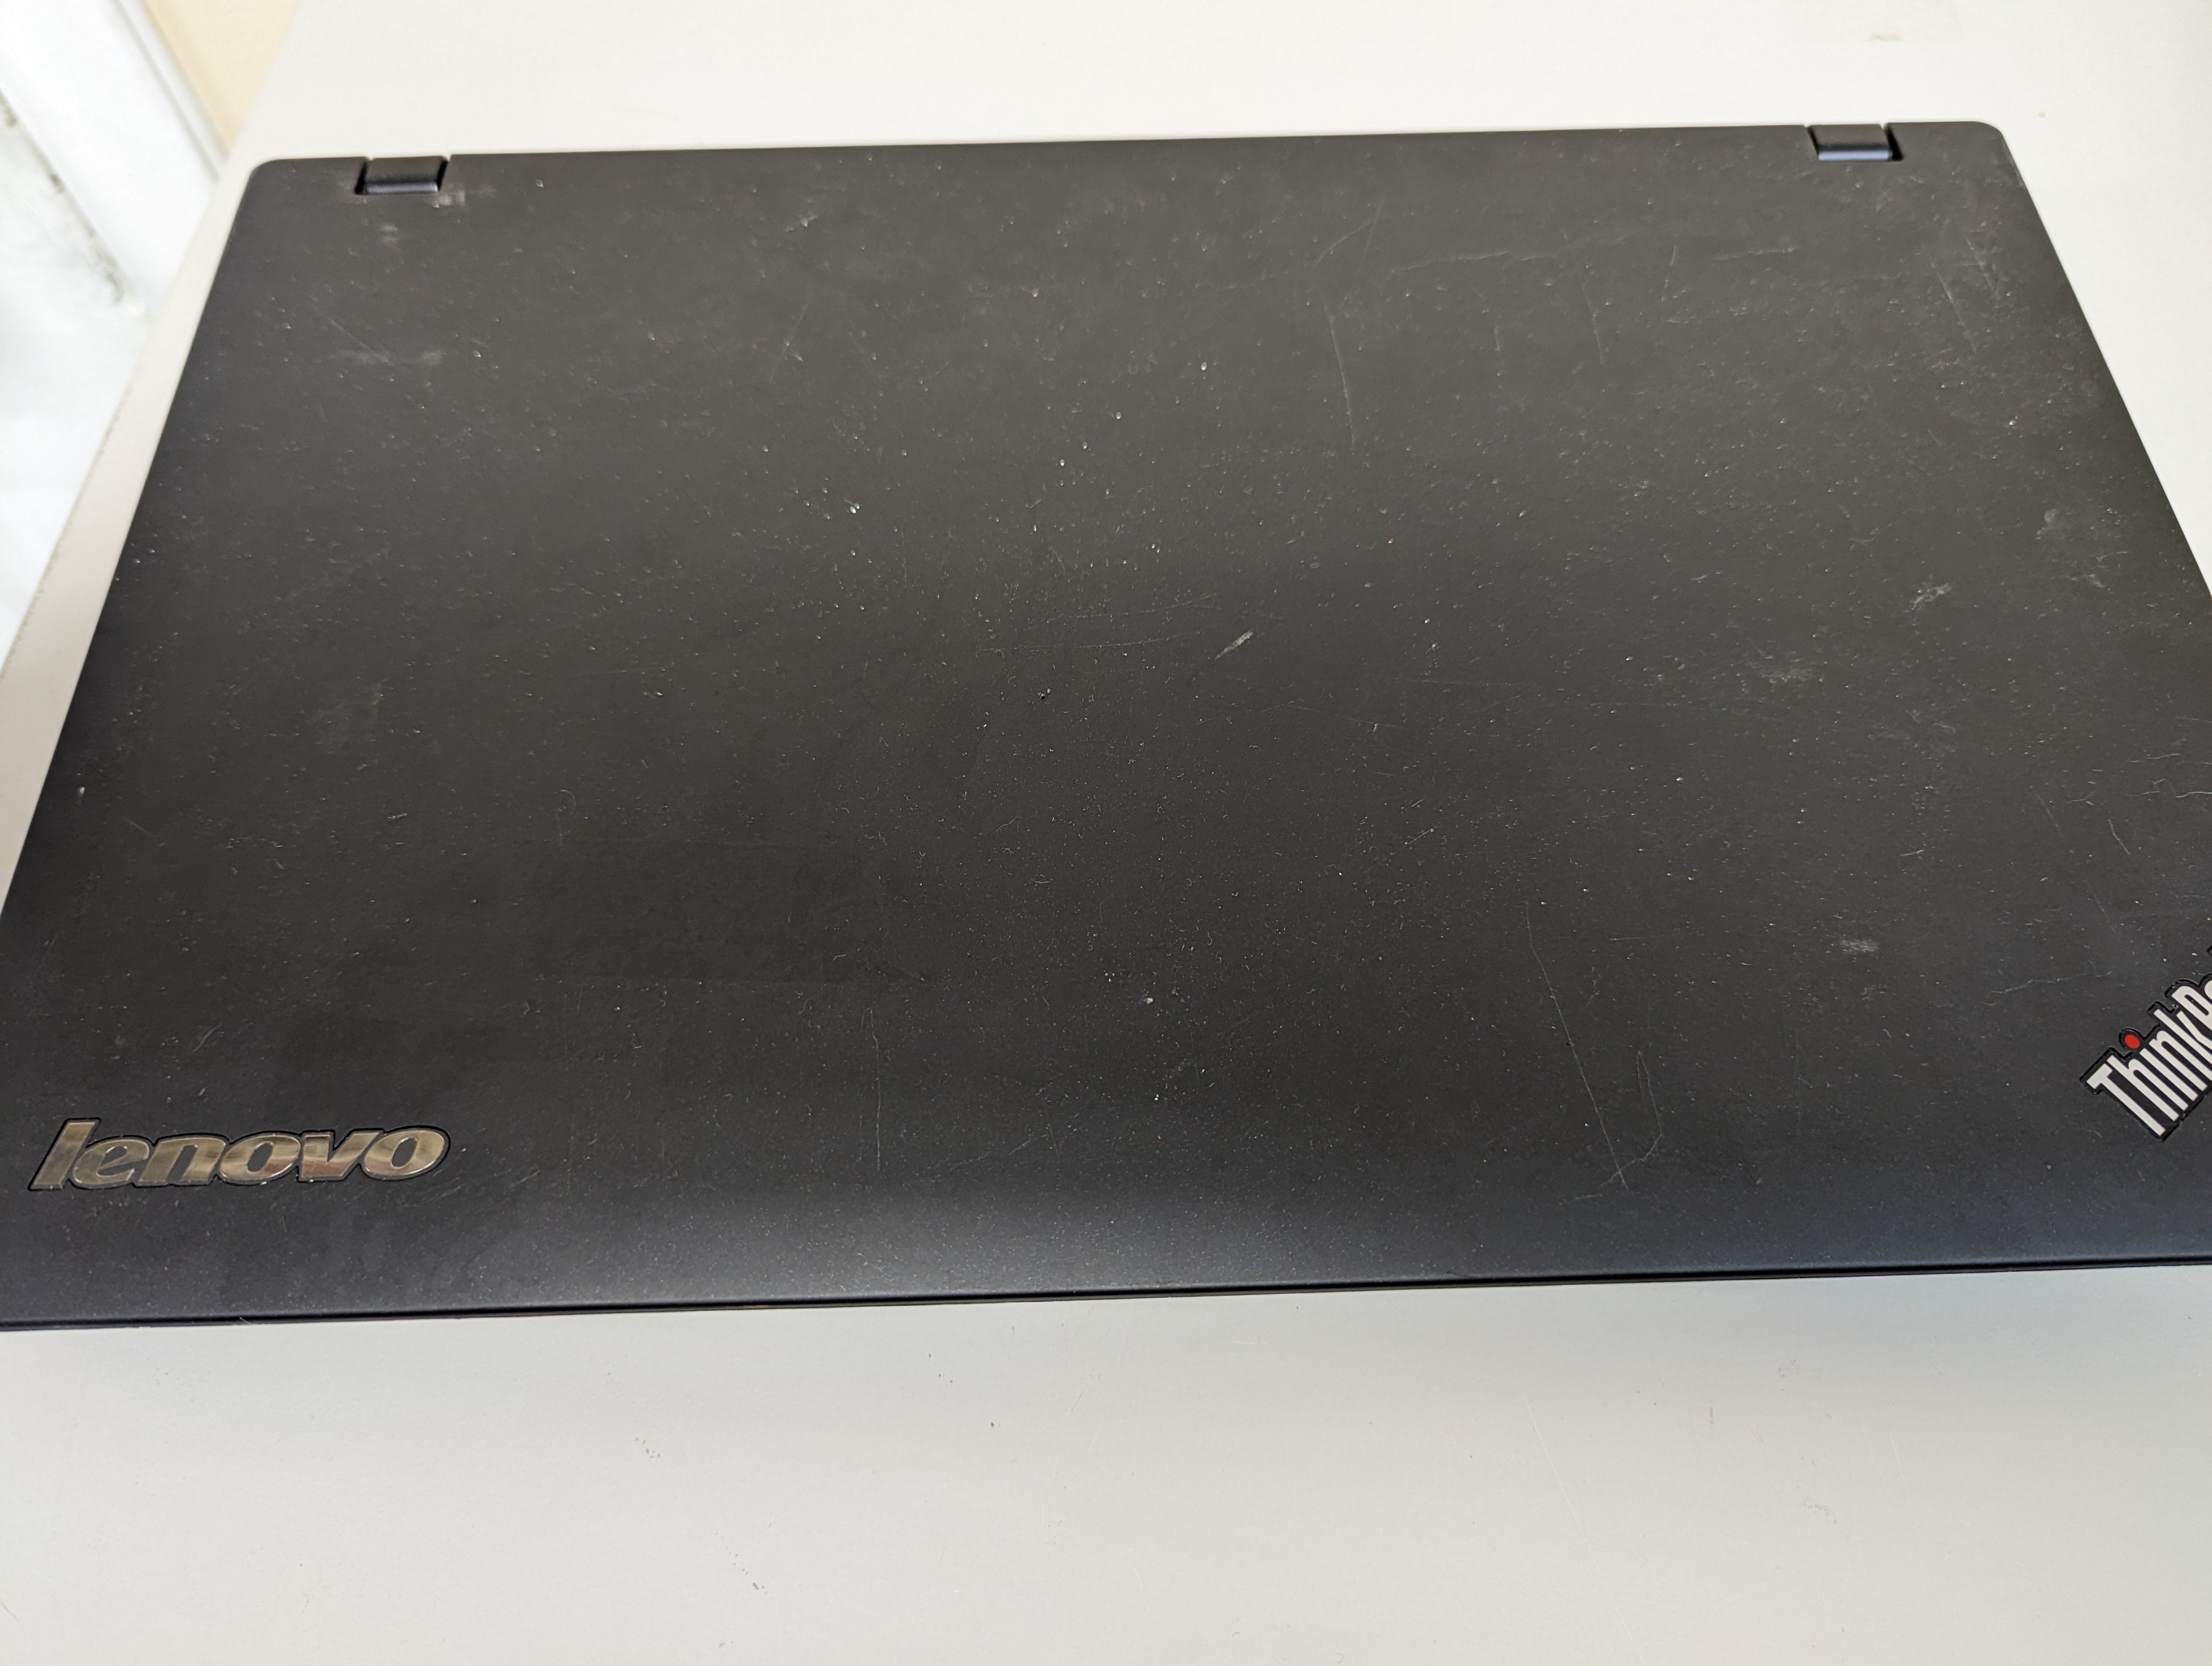 Lenovo ThinkPad E520 remis à neuf.